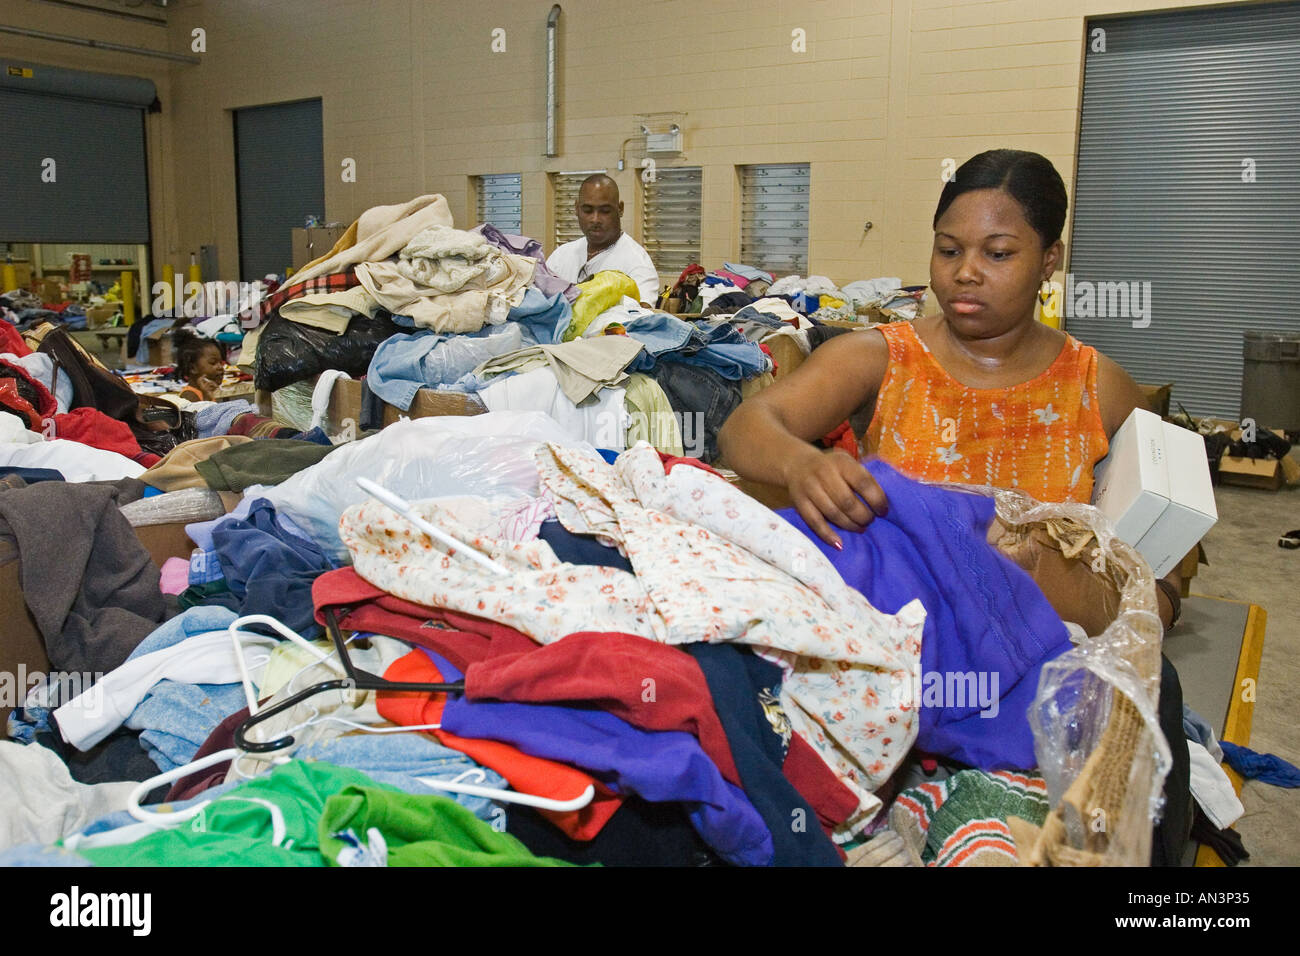 Hurricane Katrina Survivors Look for Donated Clothing in Shelter Stock  Photo - Alamy